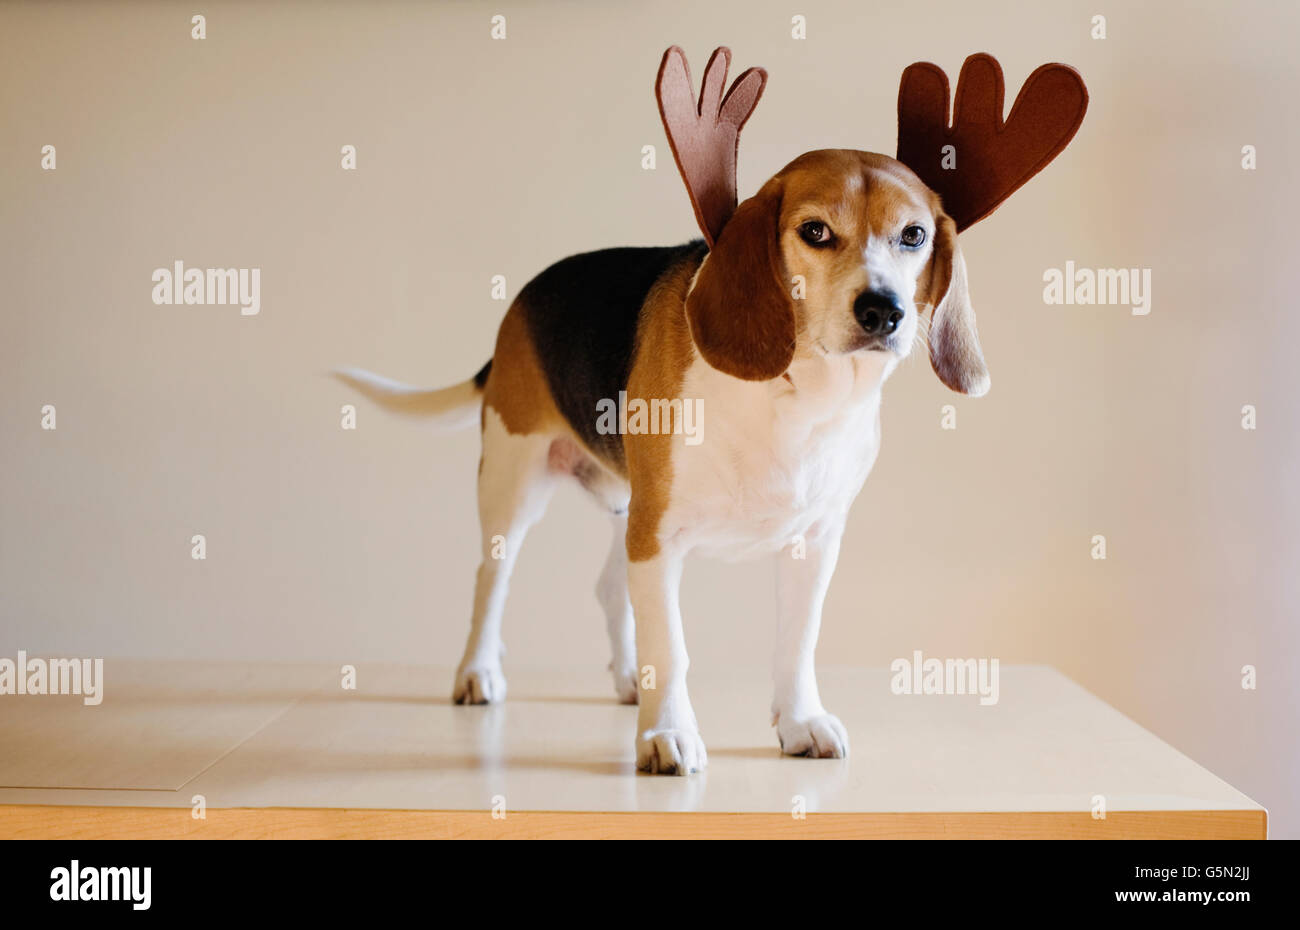 Dog wearing reindeer horns Stock Photo